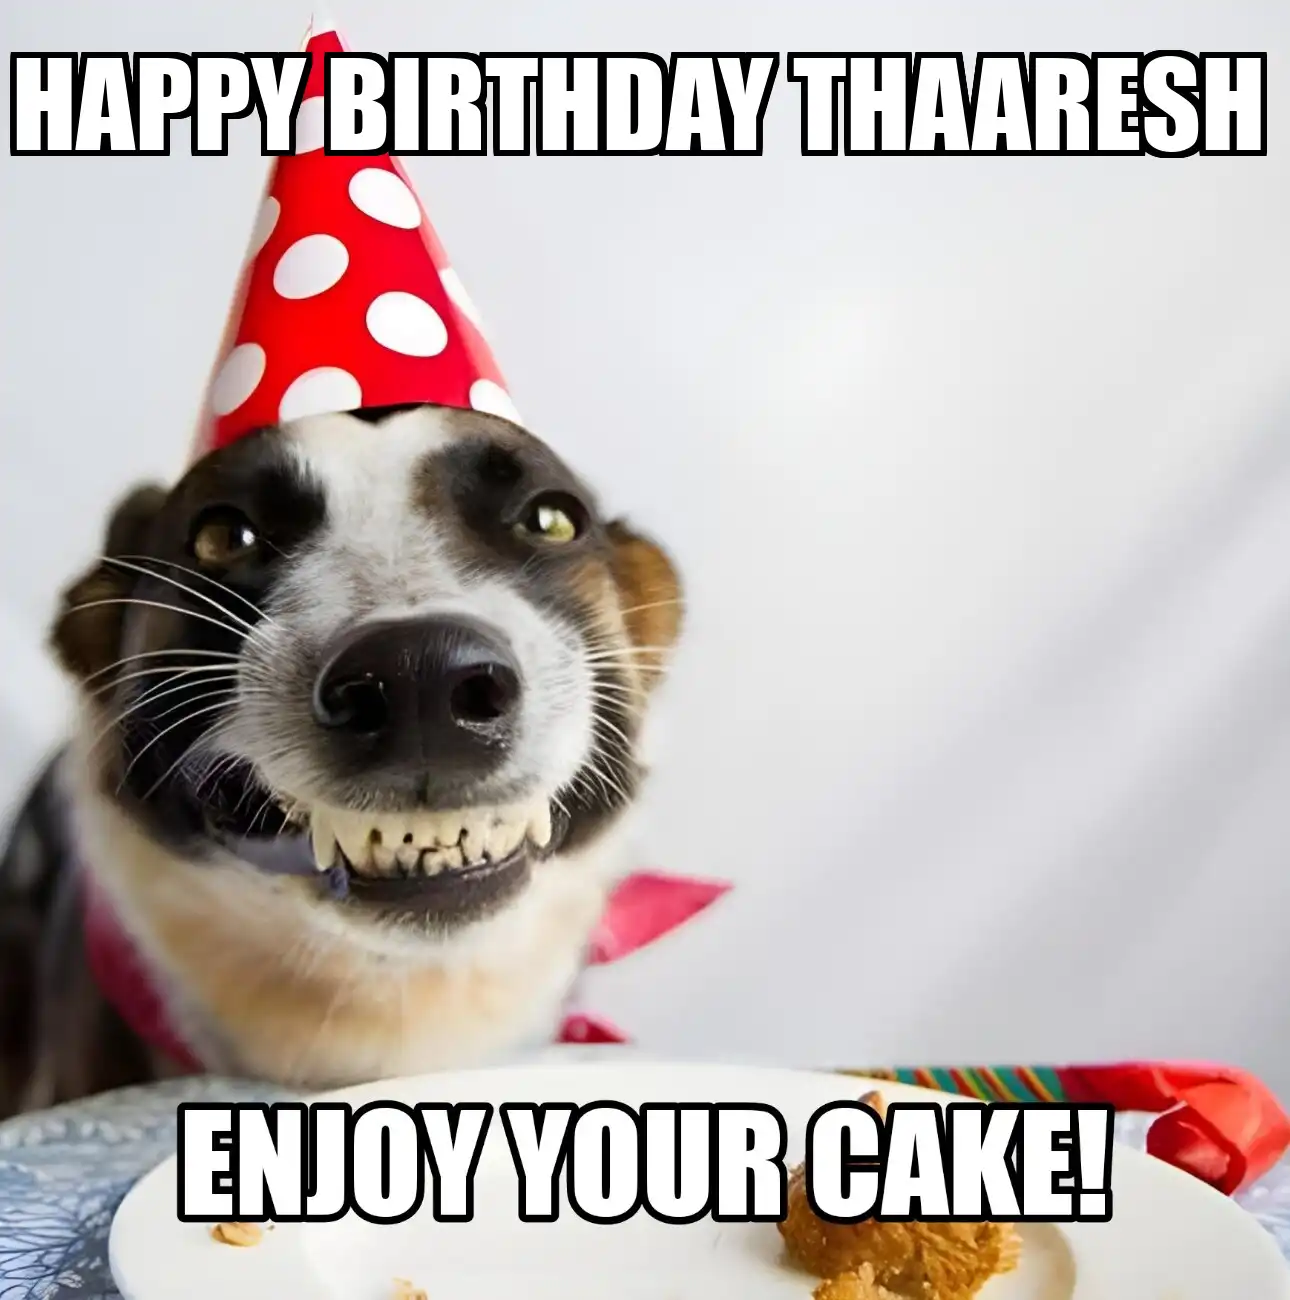 Happy Birthday Thaaresh Enjoy Your Cake Dog Meme